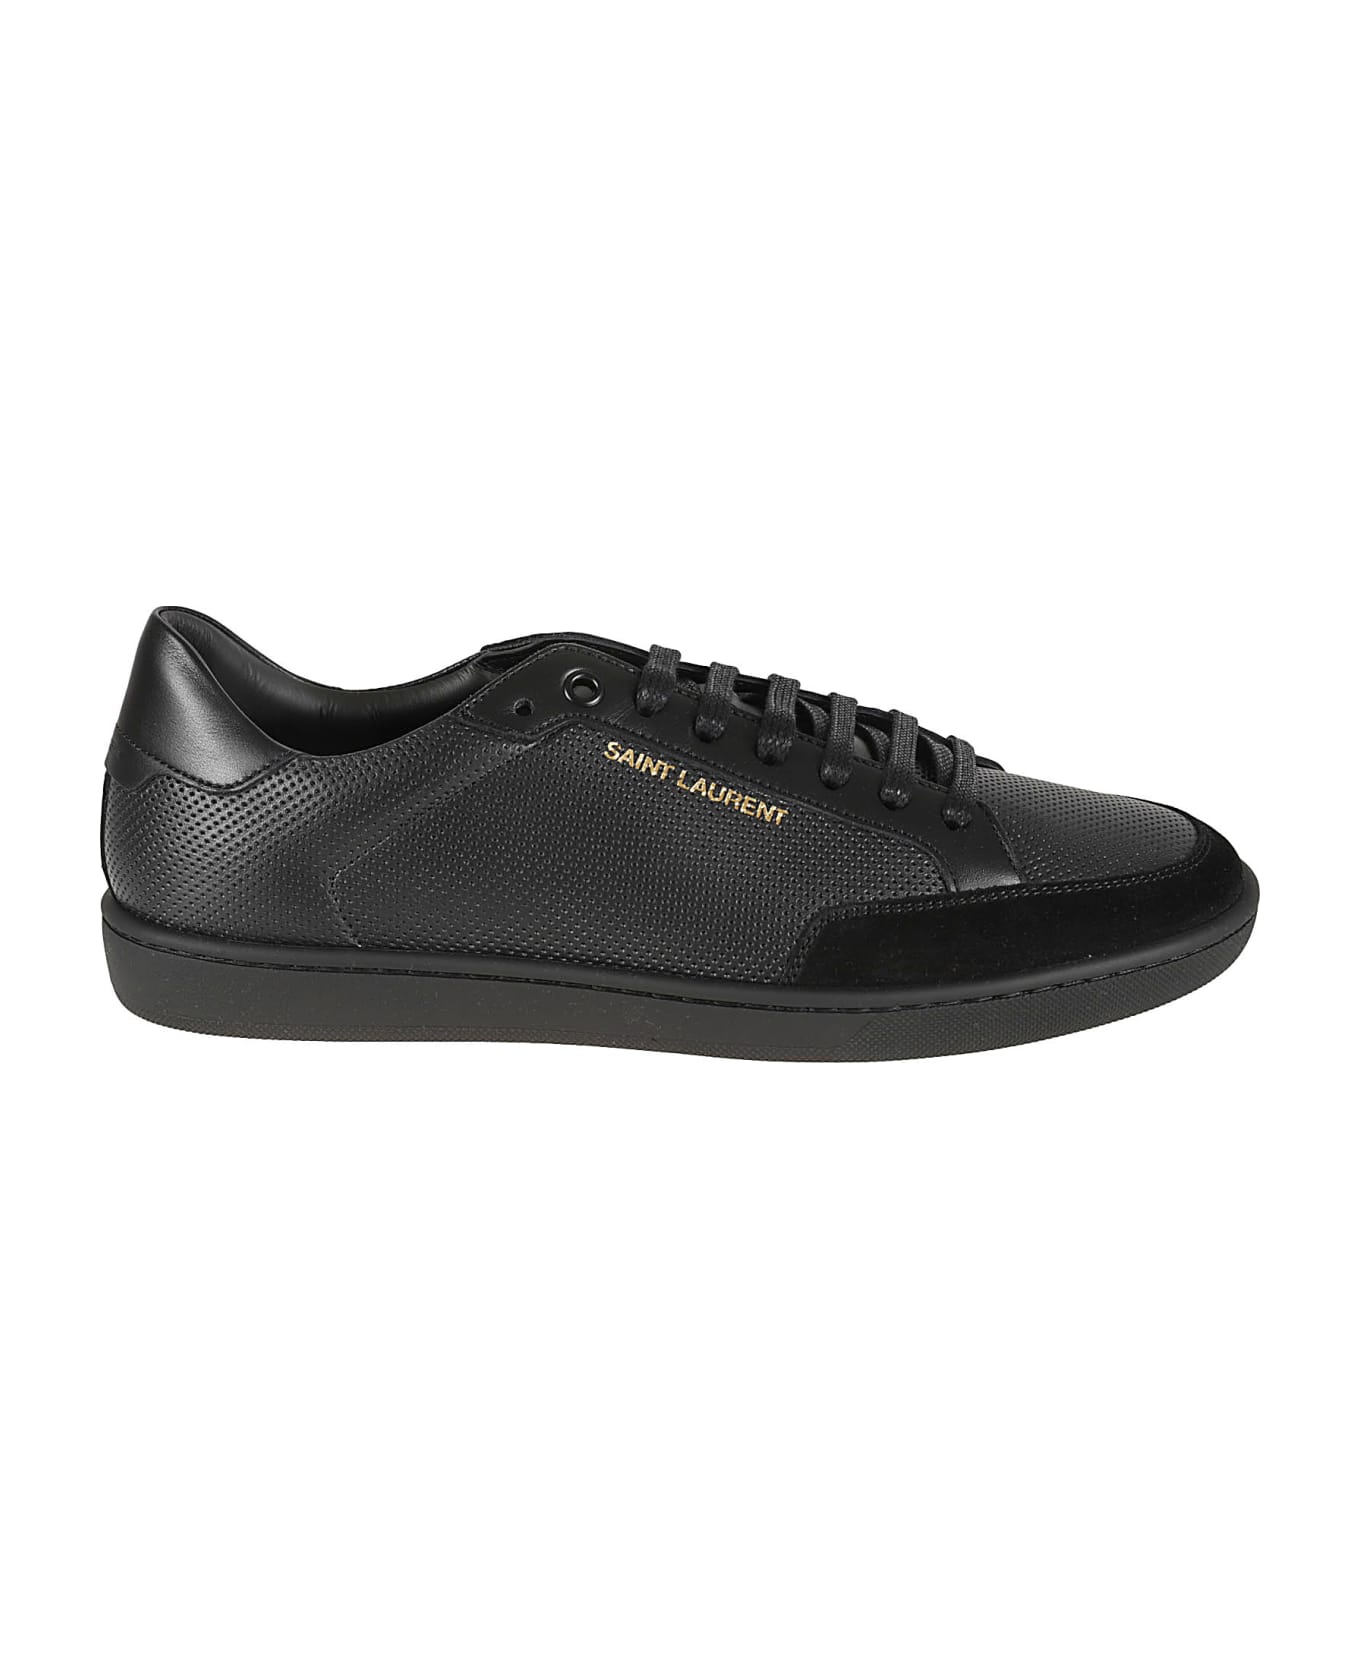 Saint Laurent Sl/10 Low-top Sneakers - Black